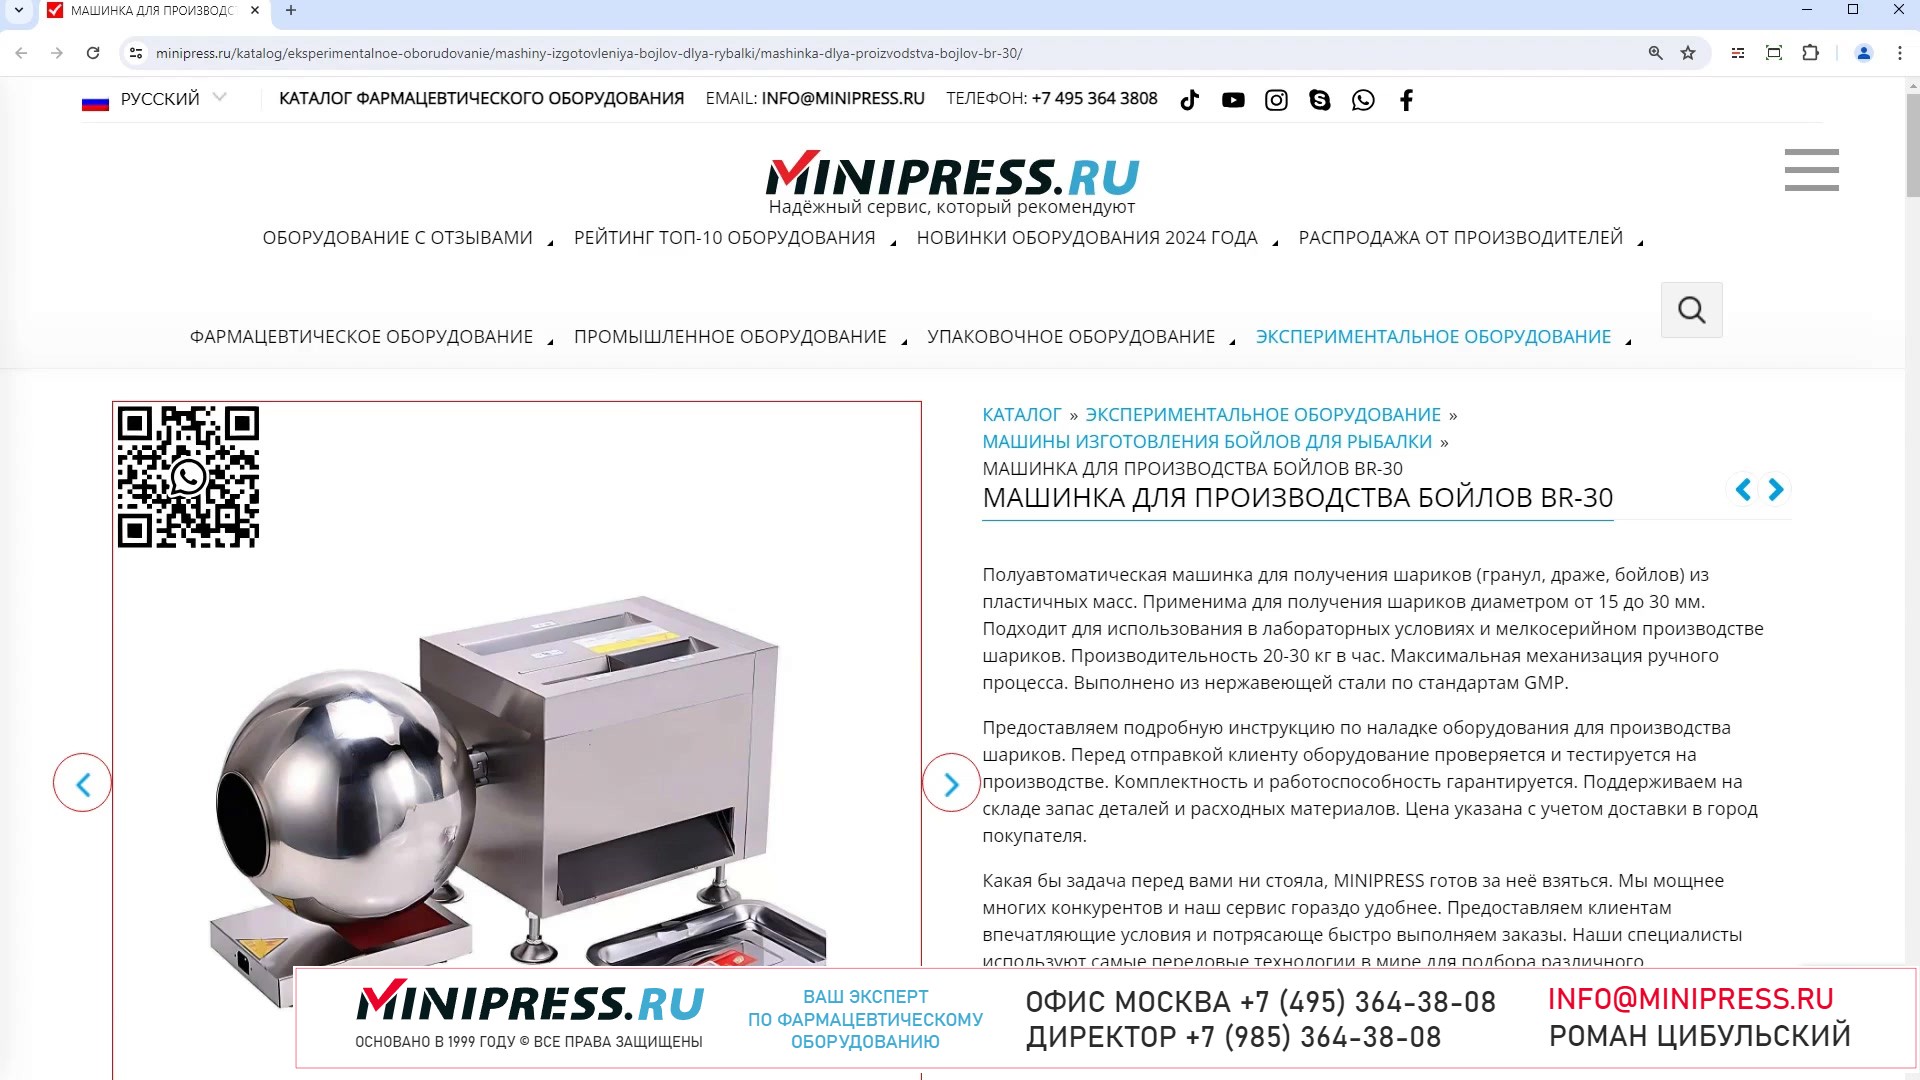 Minipress.ru Машинка для производства бойлов BR-30